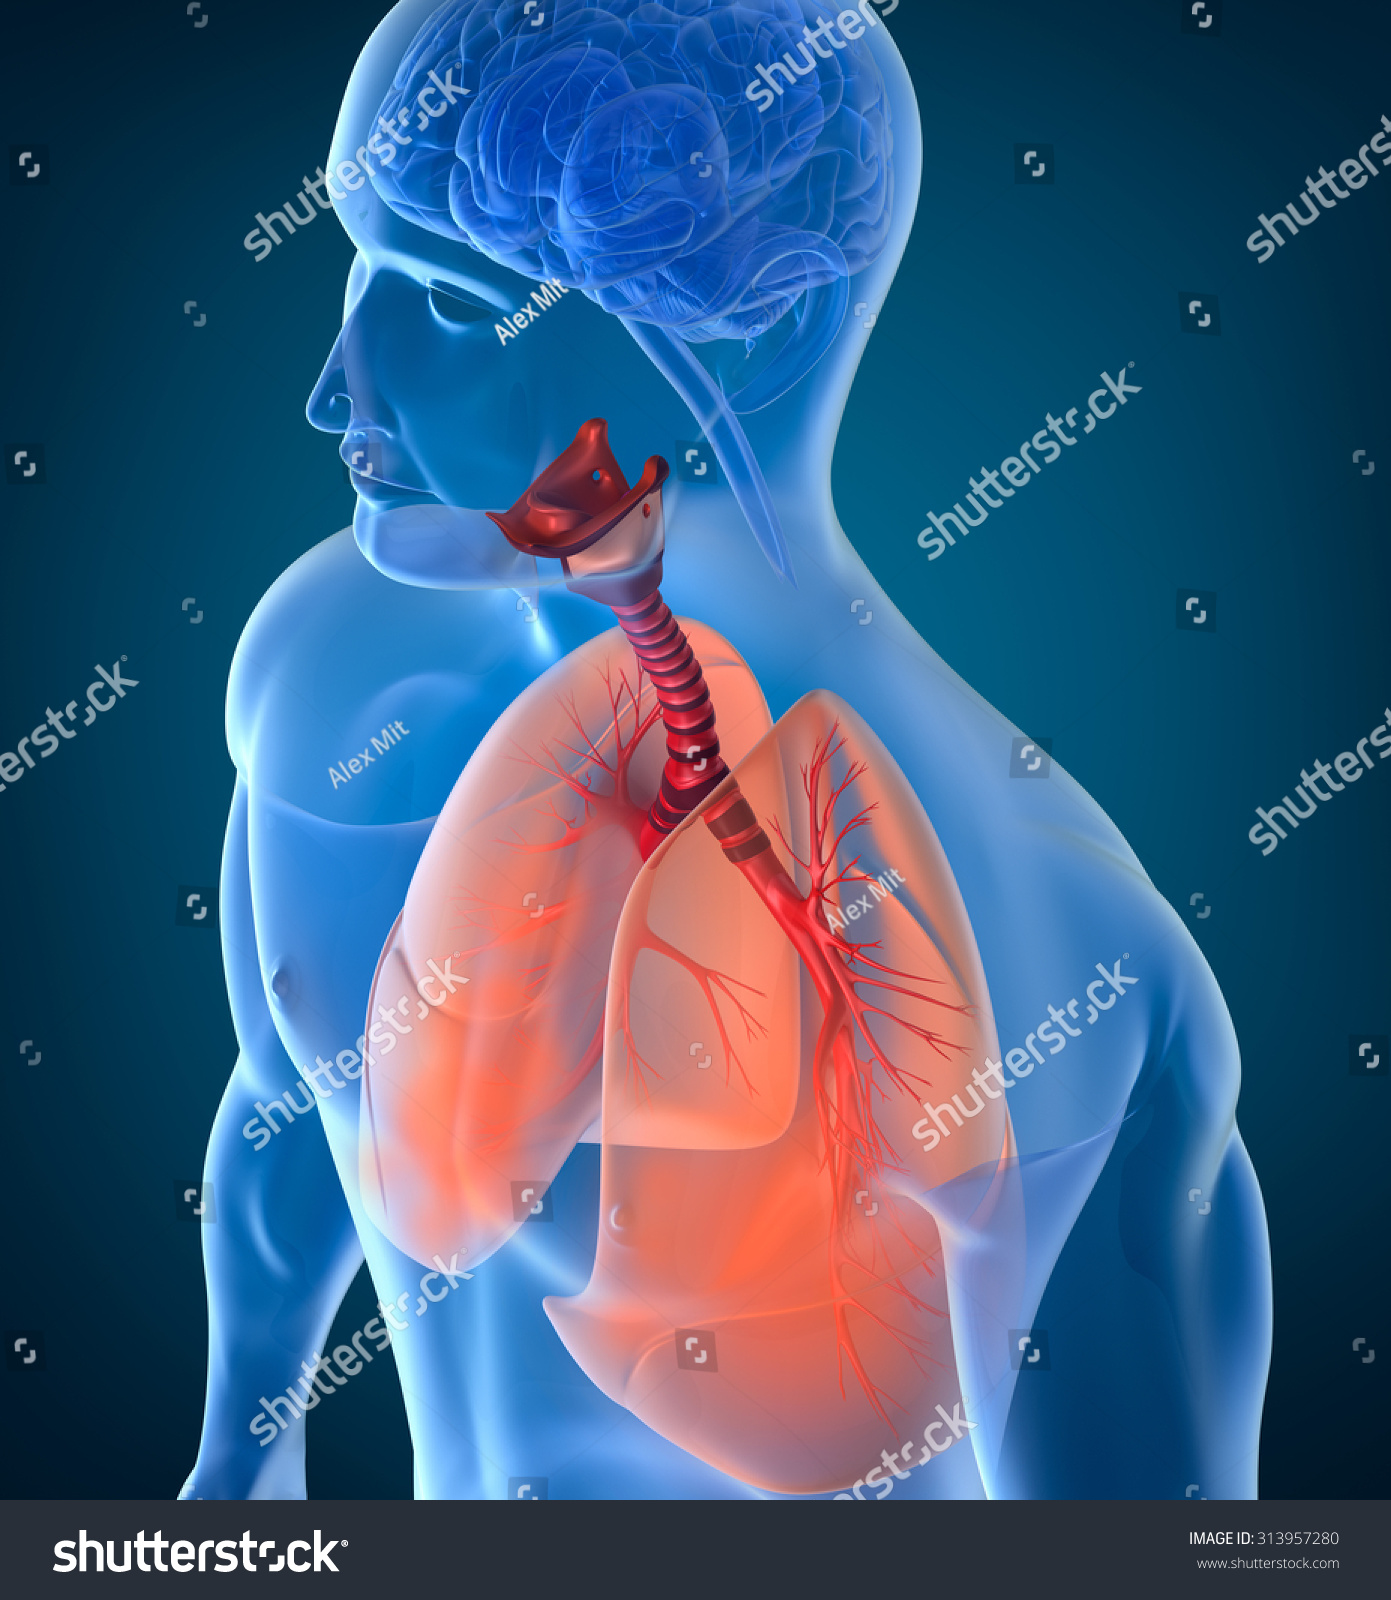 Anatomy Of Human Respiratory System Stock Photo 313957280 : Shutterstock